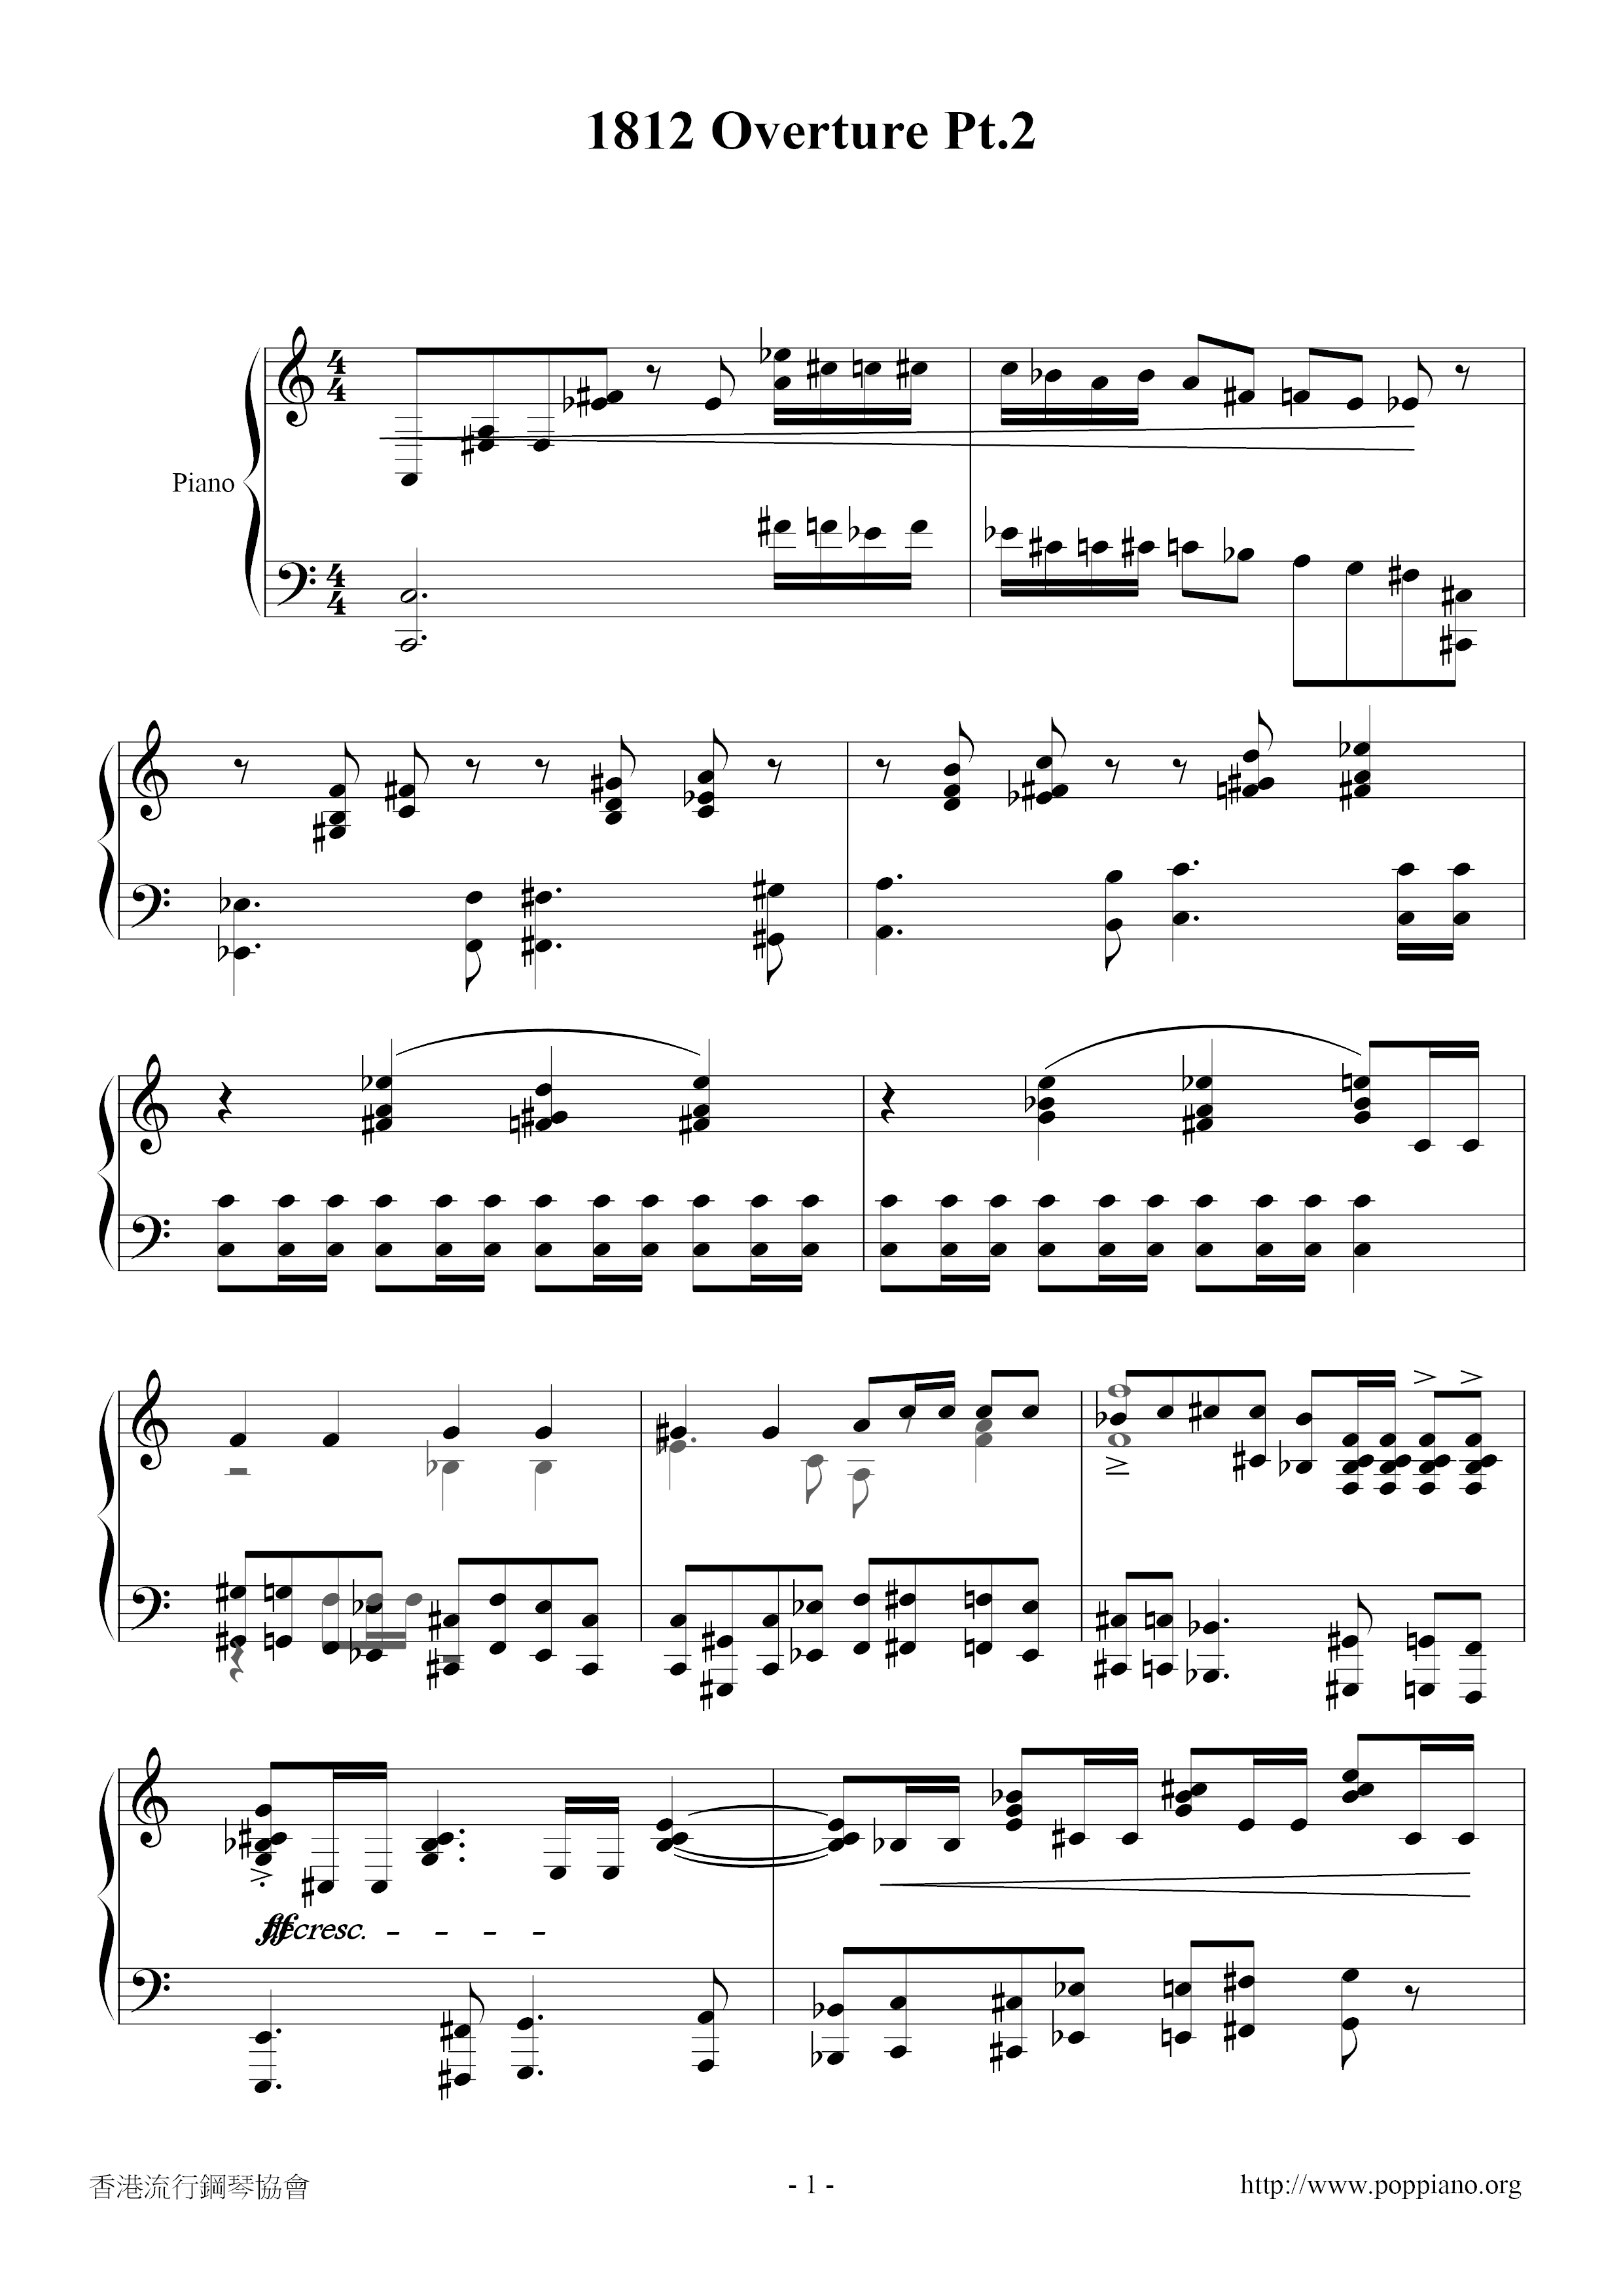 1812 overture pt.2 Score